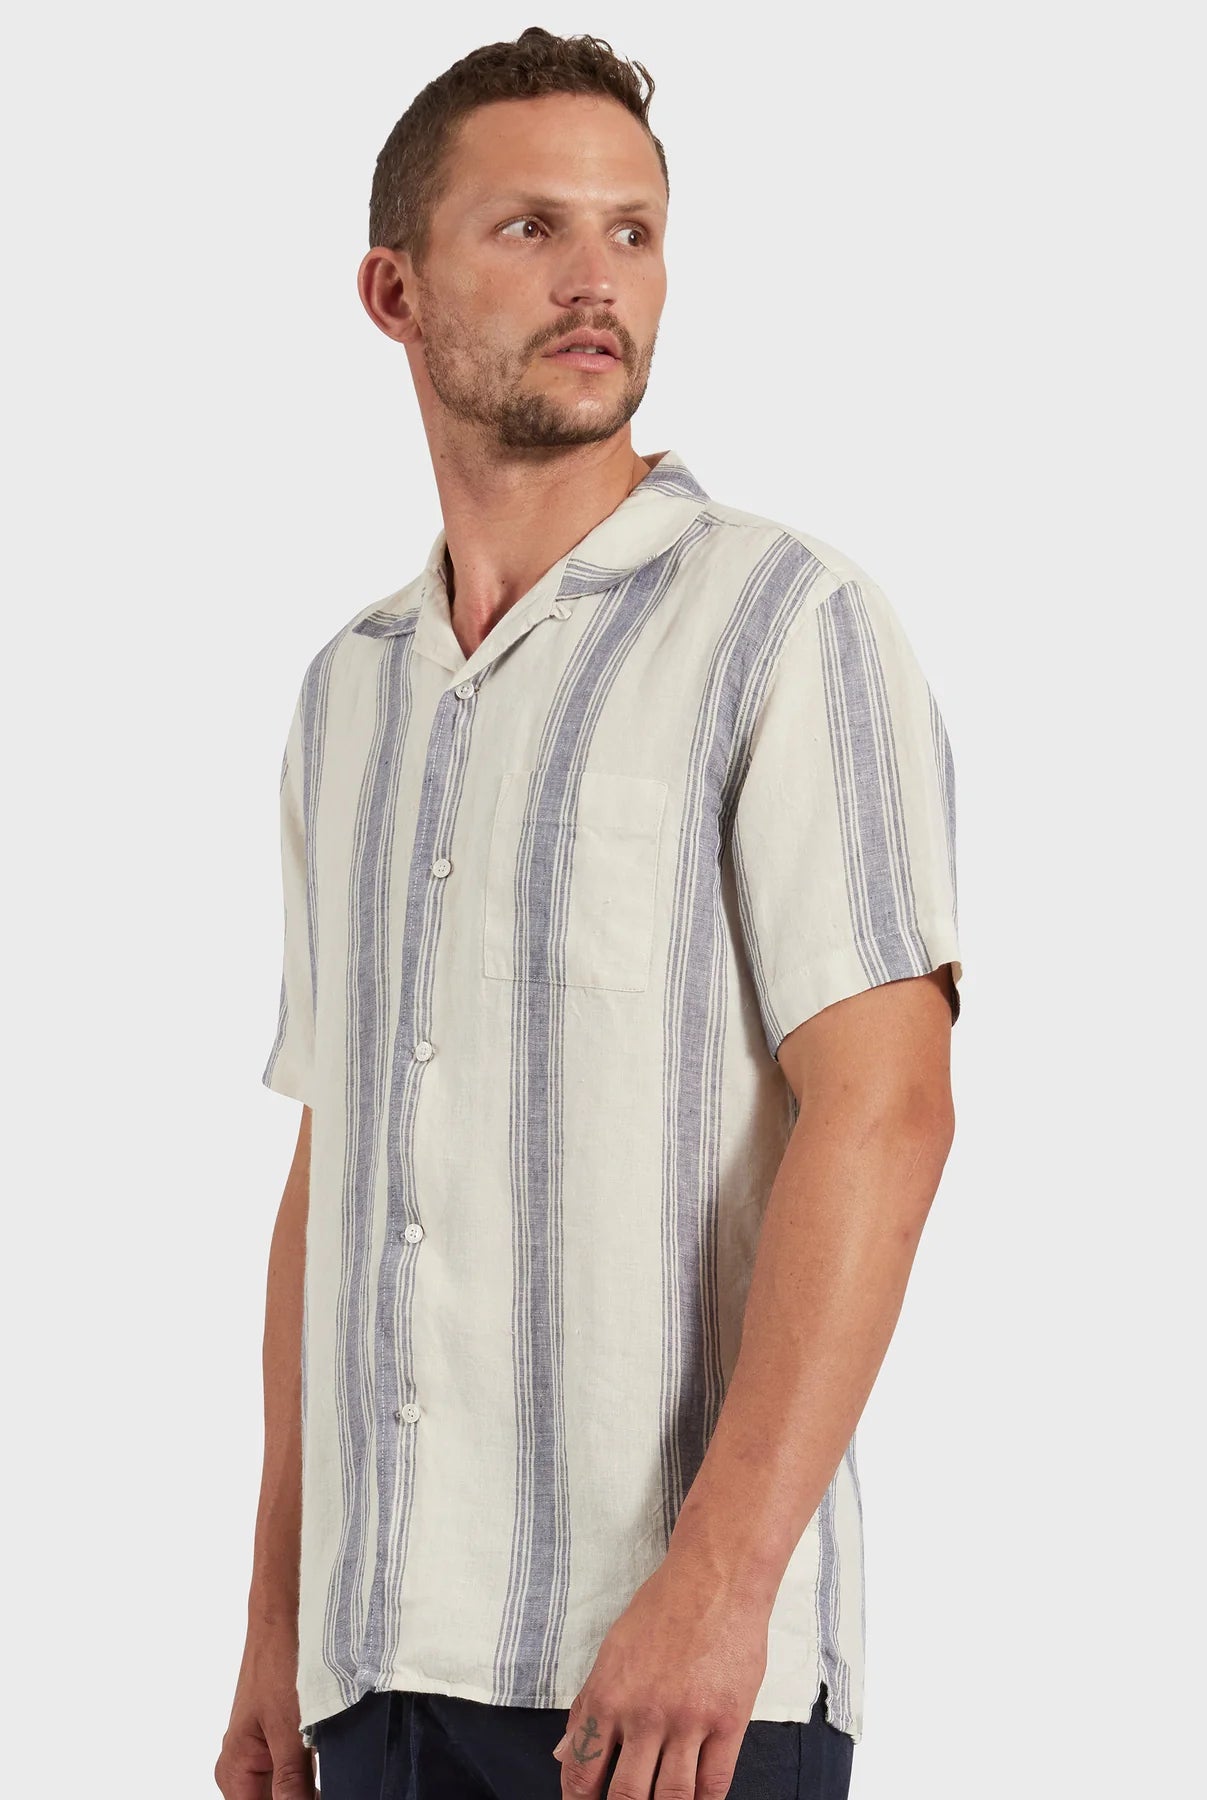 Driftwood Short Sleeve Shirt in Navy Stripe